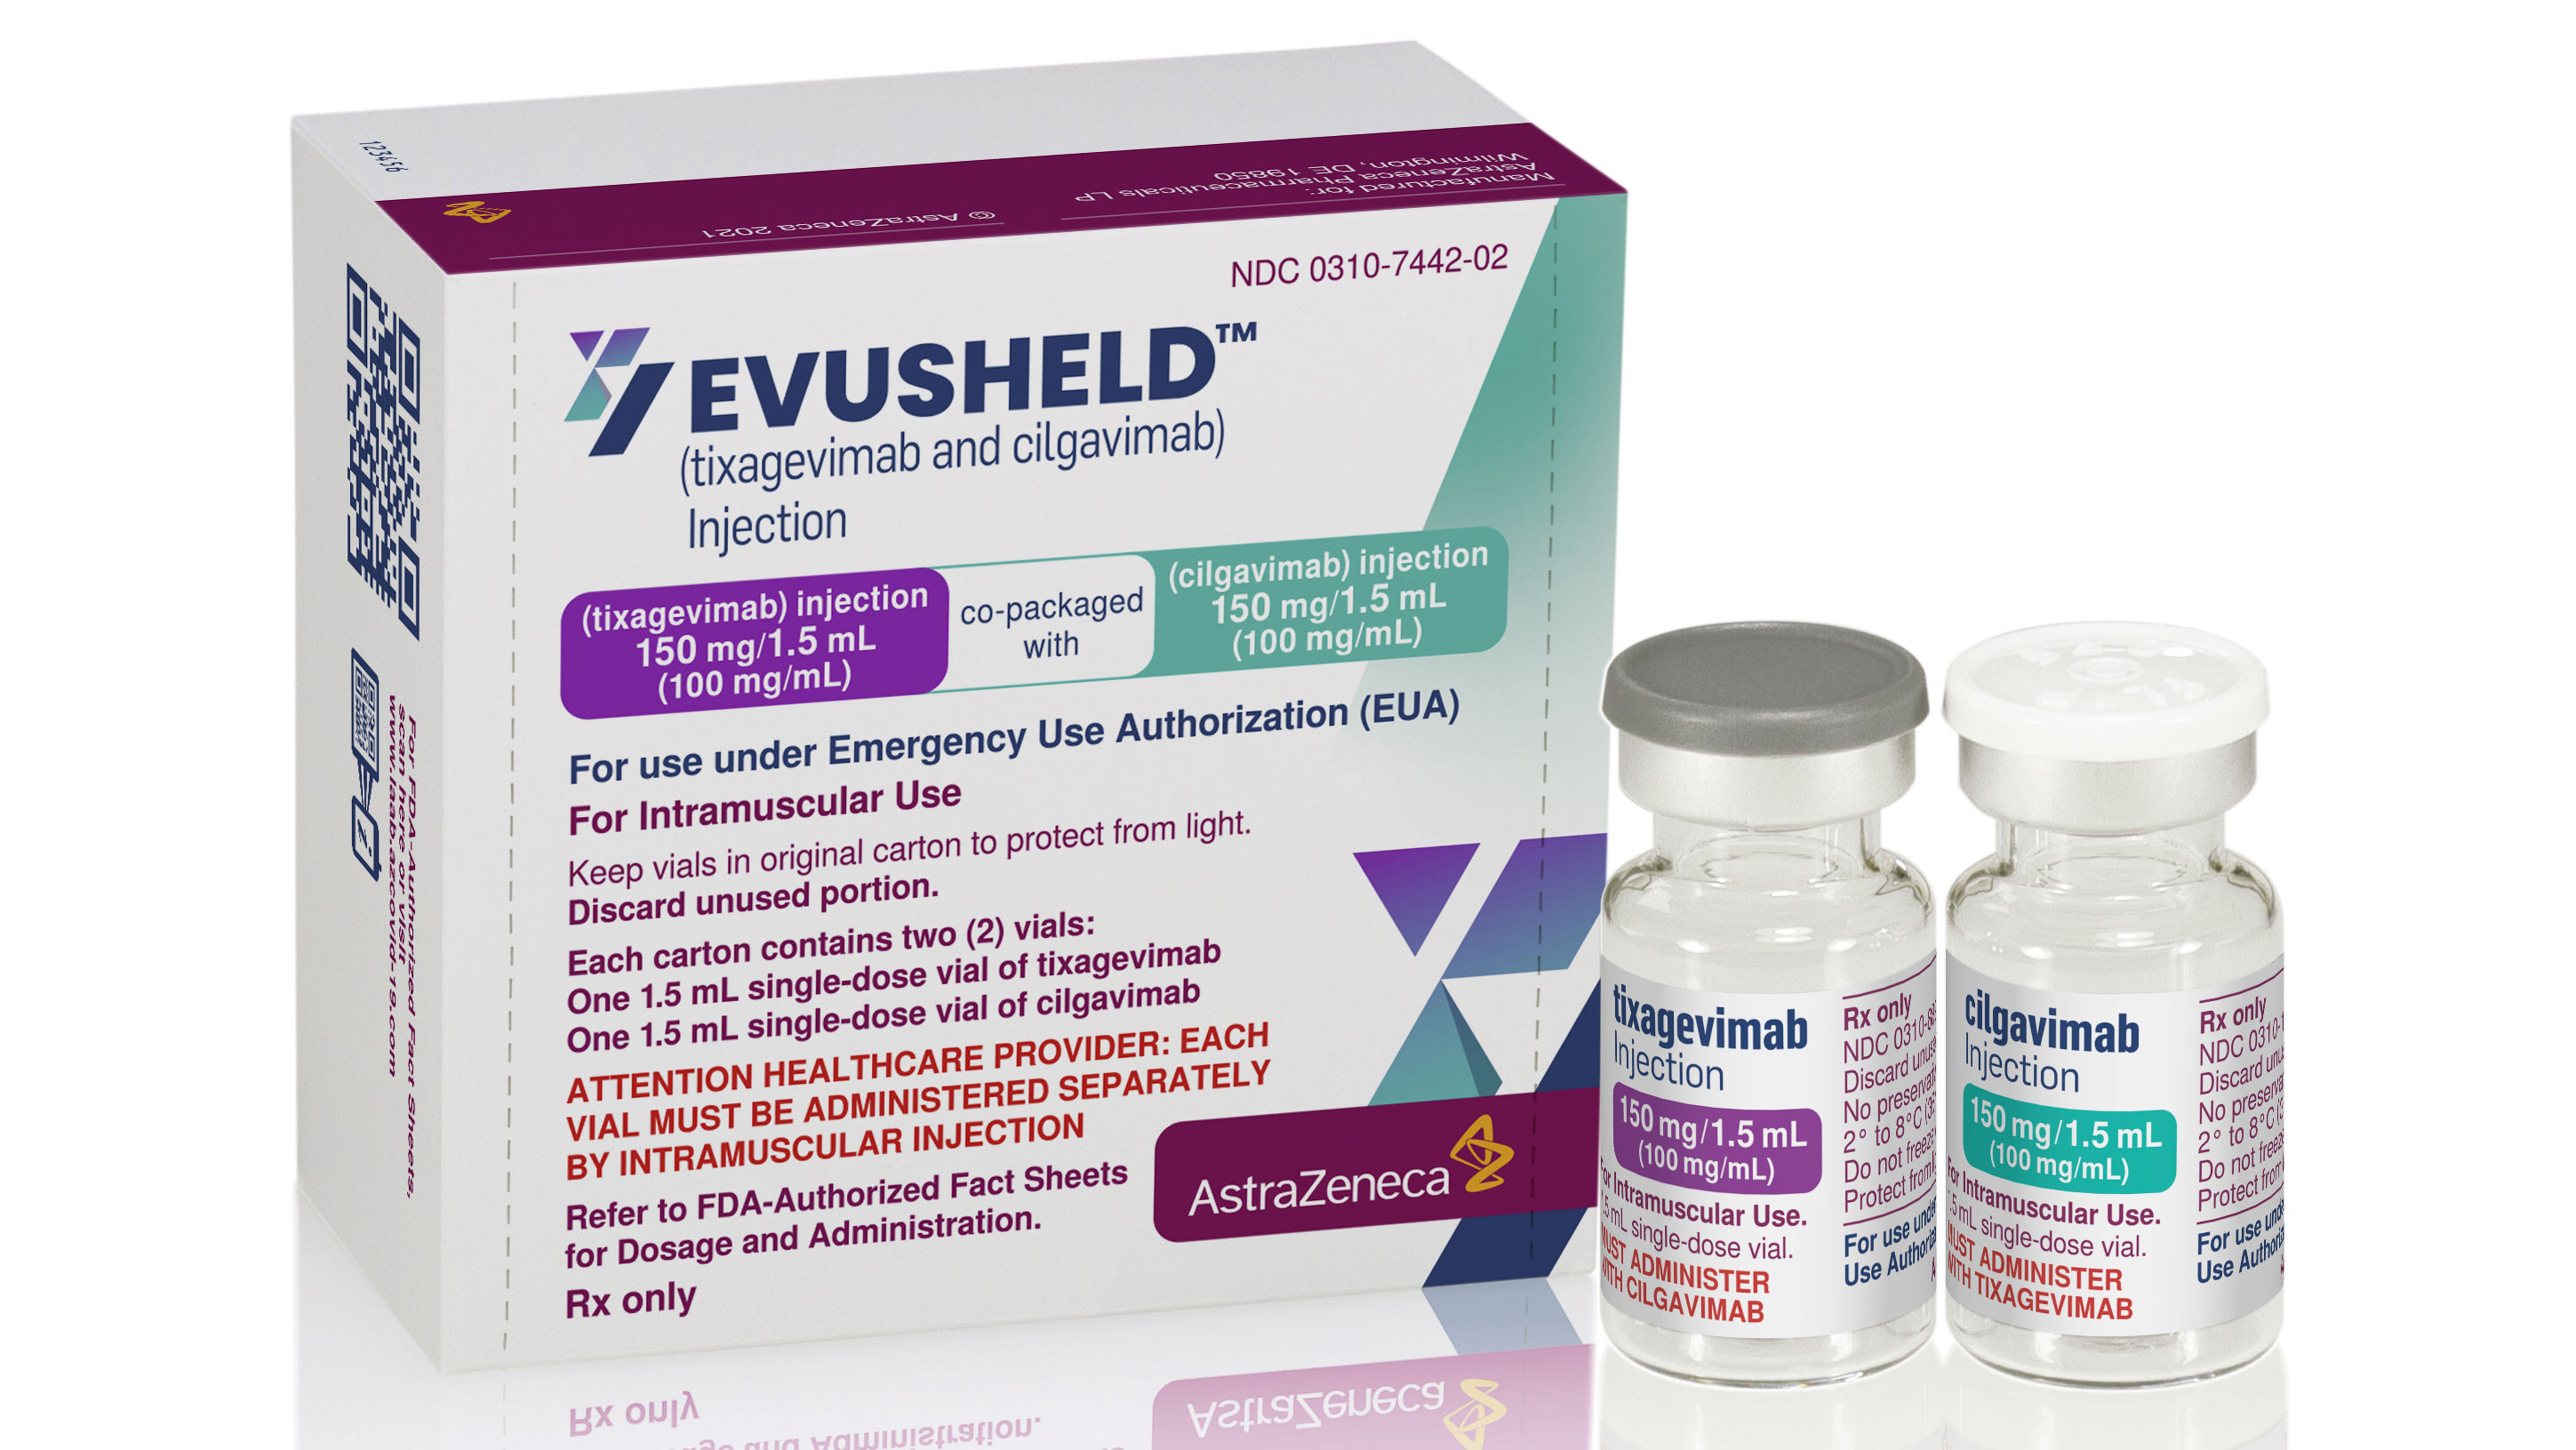 Covid19-Medikament Evusheld von AstraZeneca  | picture alliance / ASSOCIATED PR